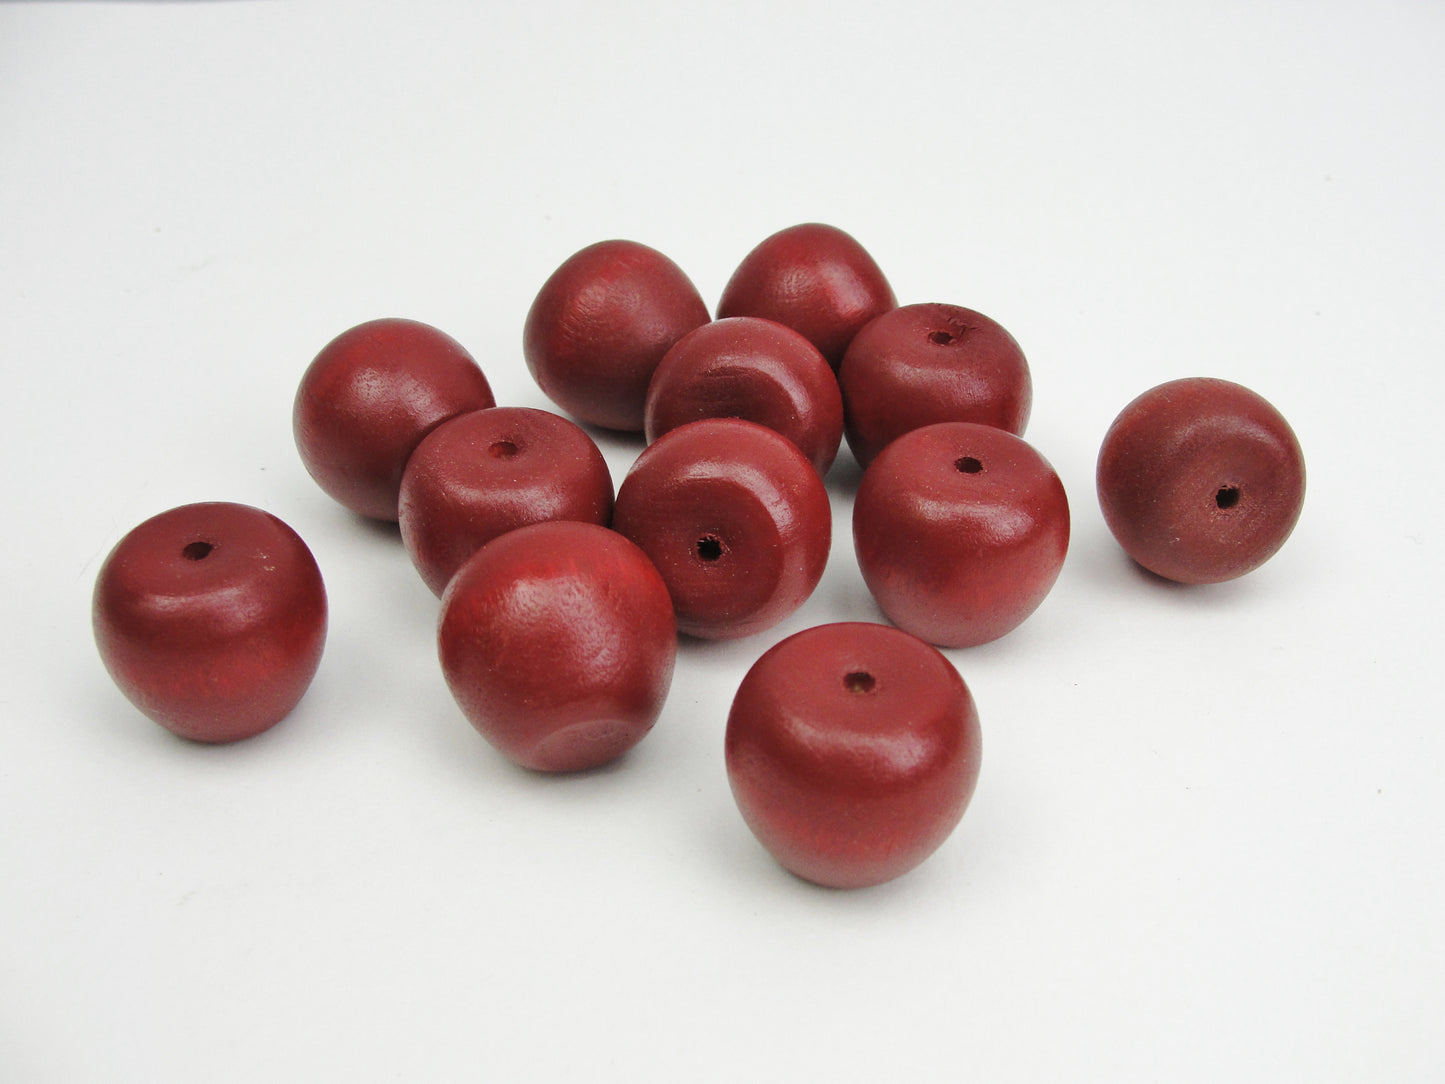 Wooden mini apples or cherries set of 12